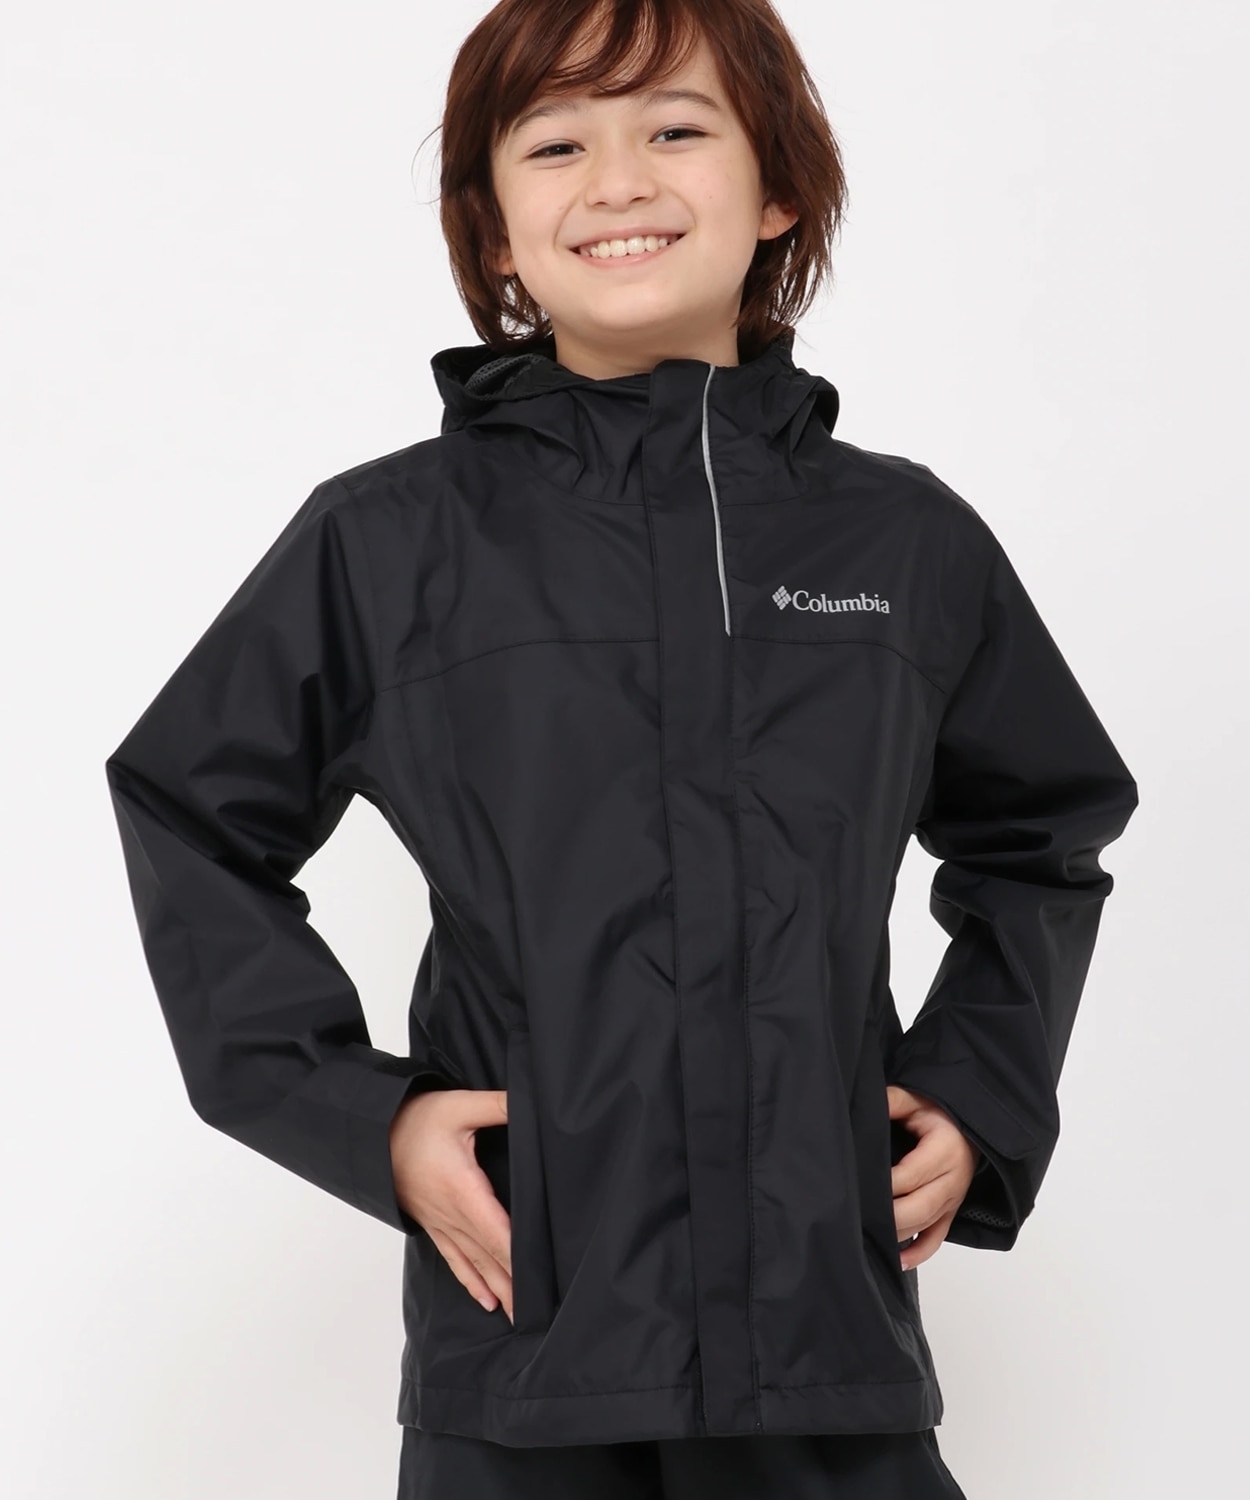 discount 85% Pink 11Y KIDS FASHION Jackets Sports Quechua waterproof jacket 